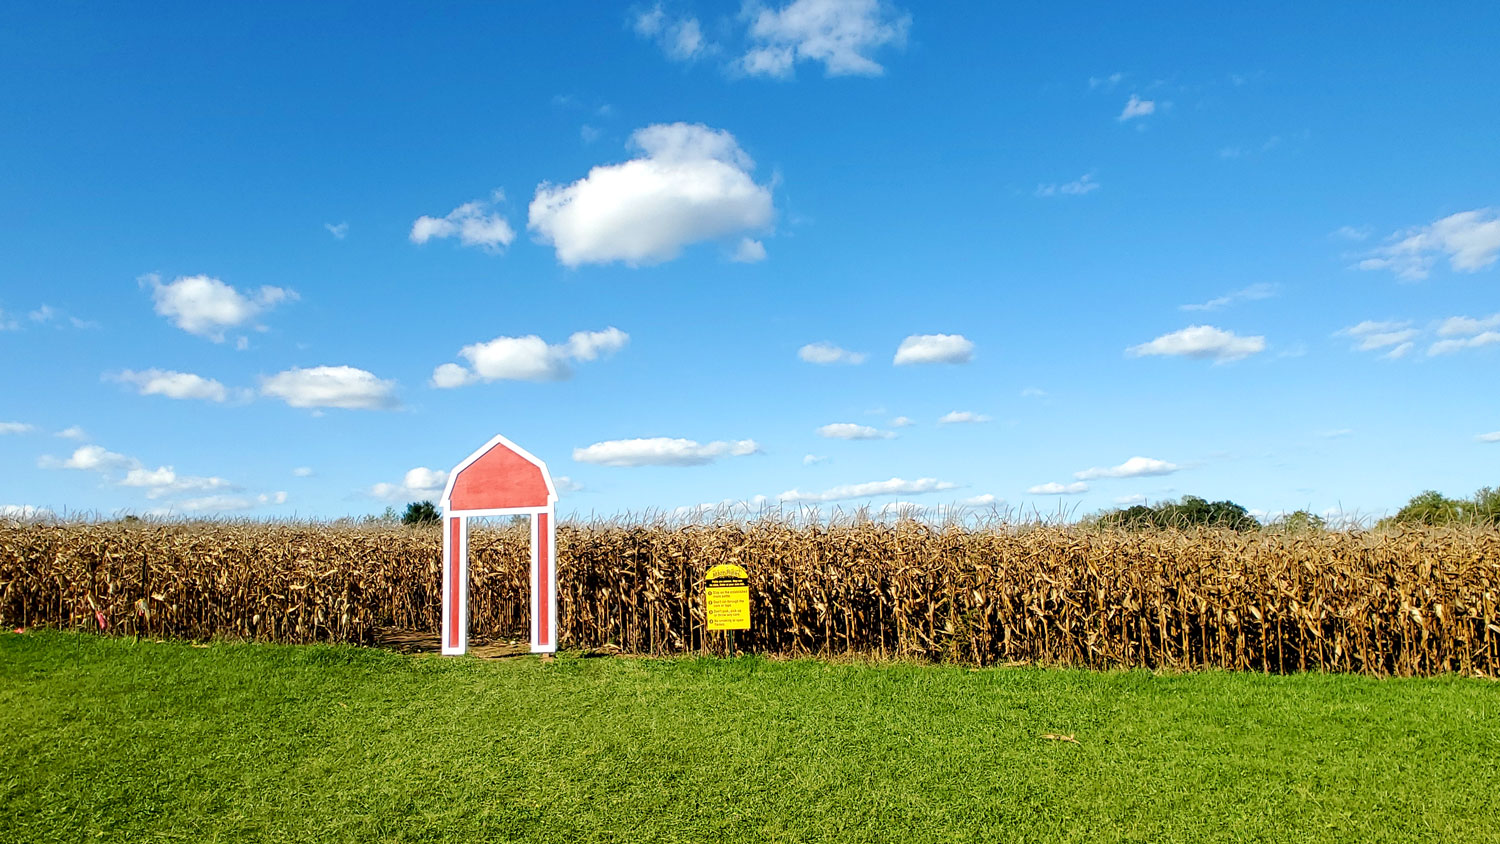 Corn maze entrance at Cody's Farm and Orchard.